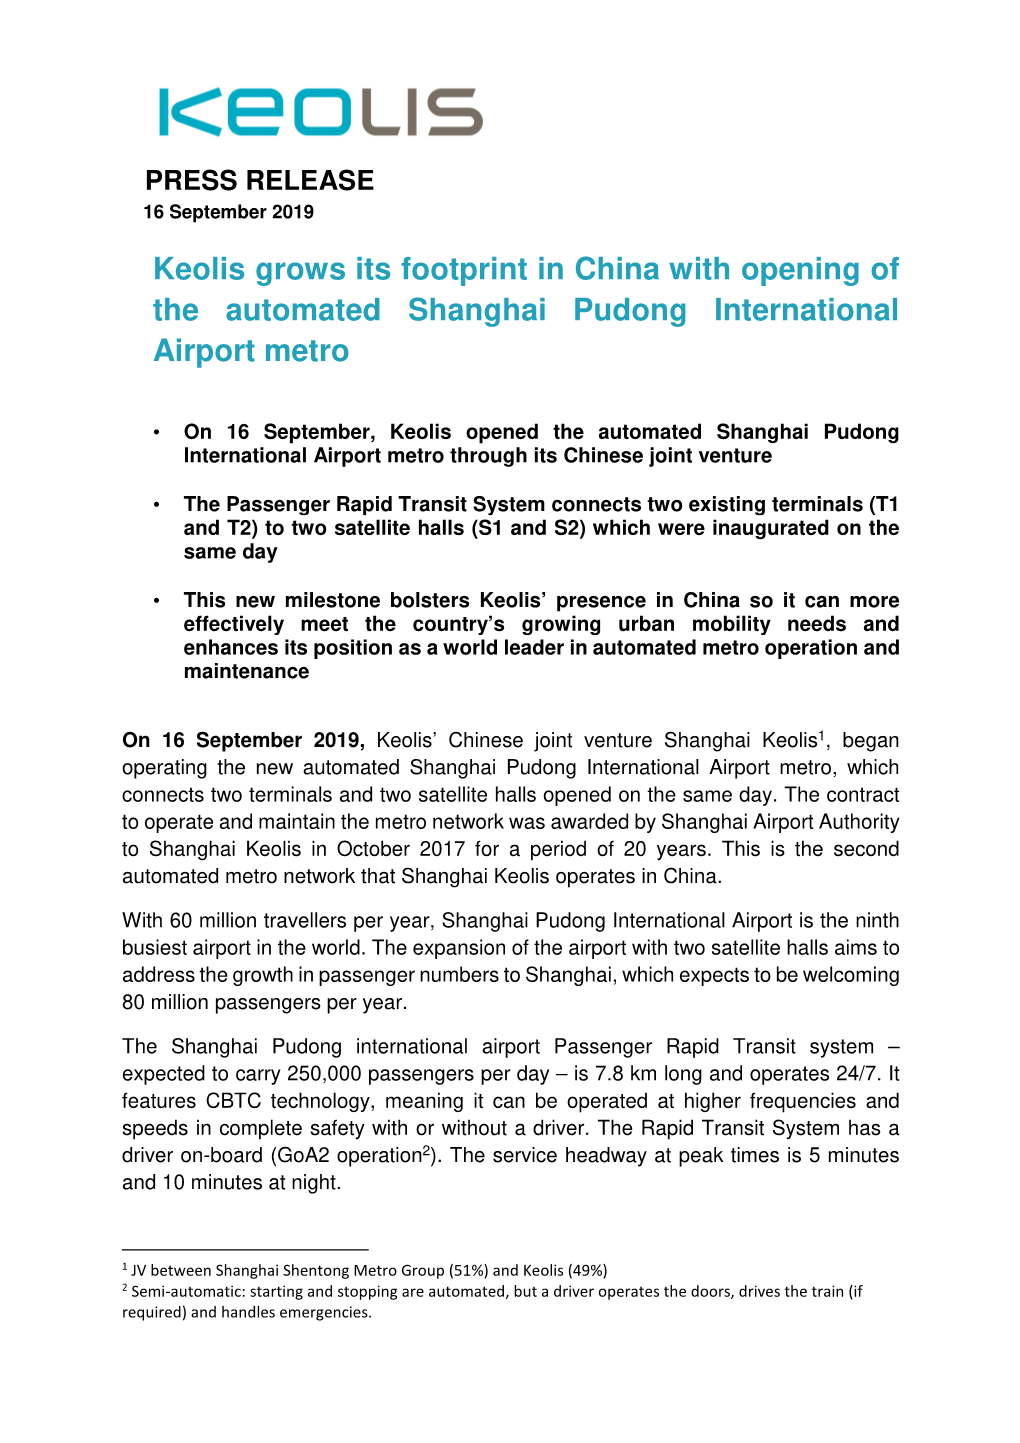 PR Keolis Opens Pudong APM Sept. 16 2019